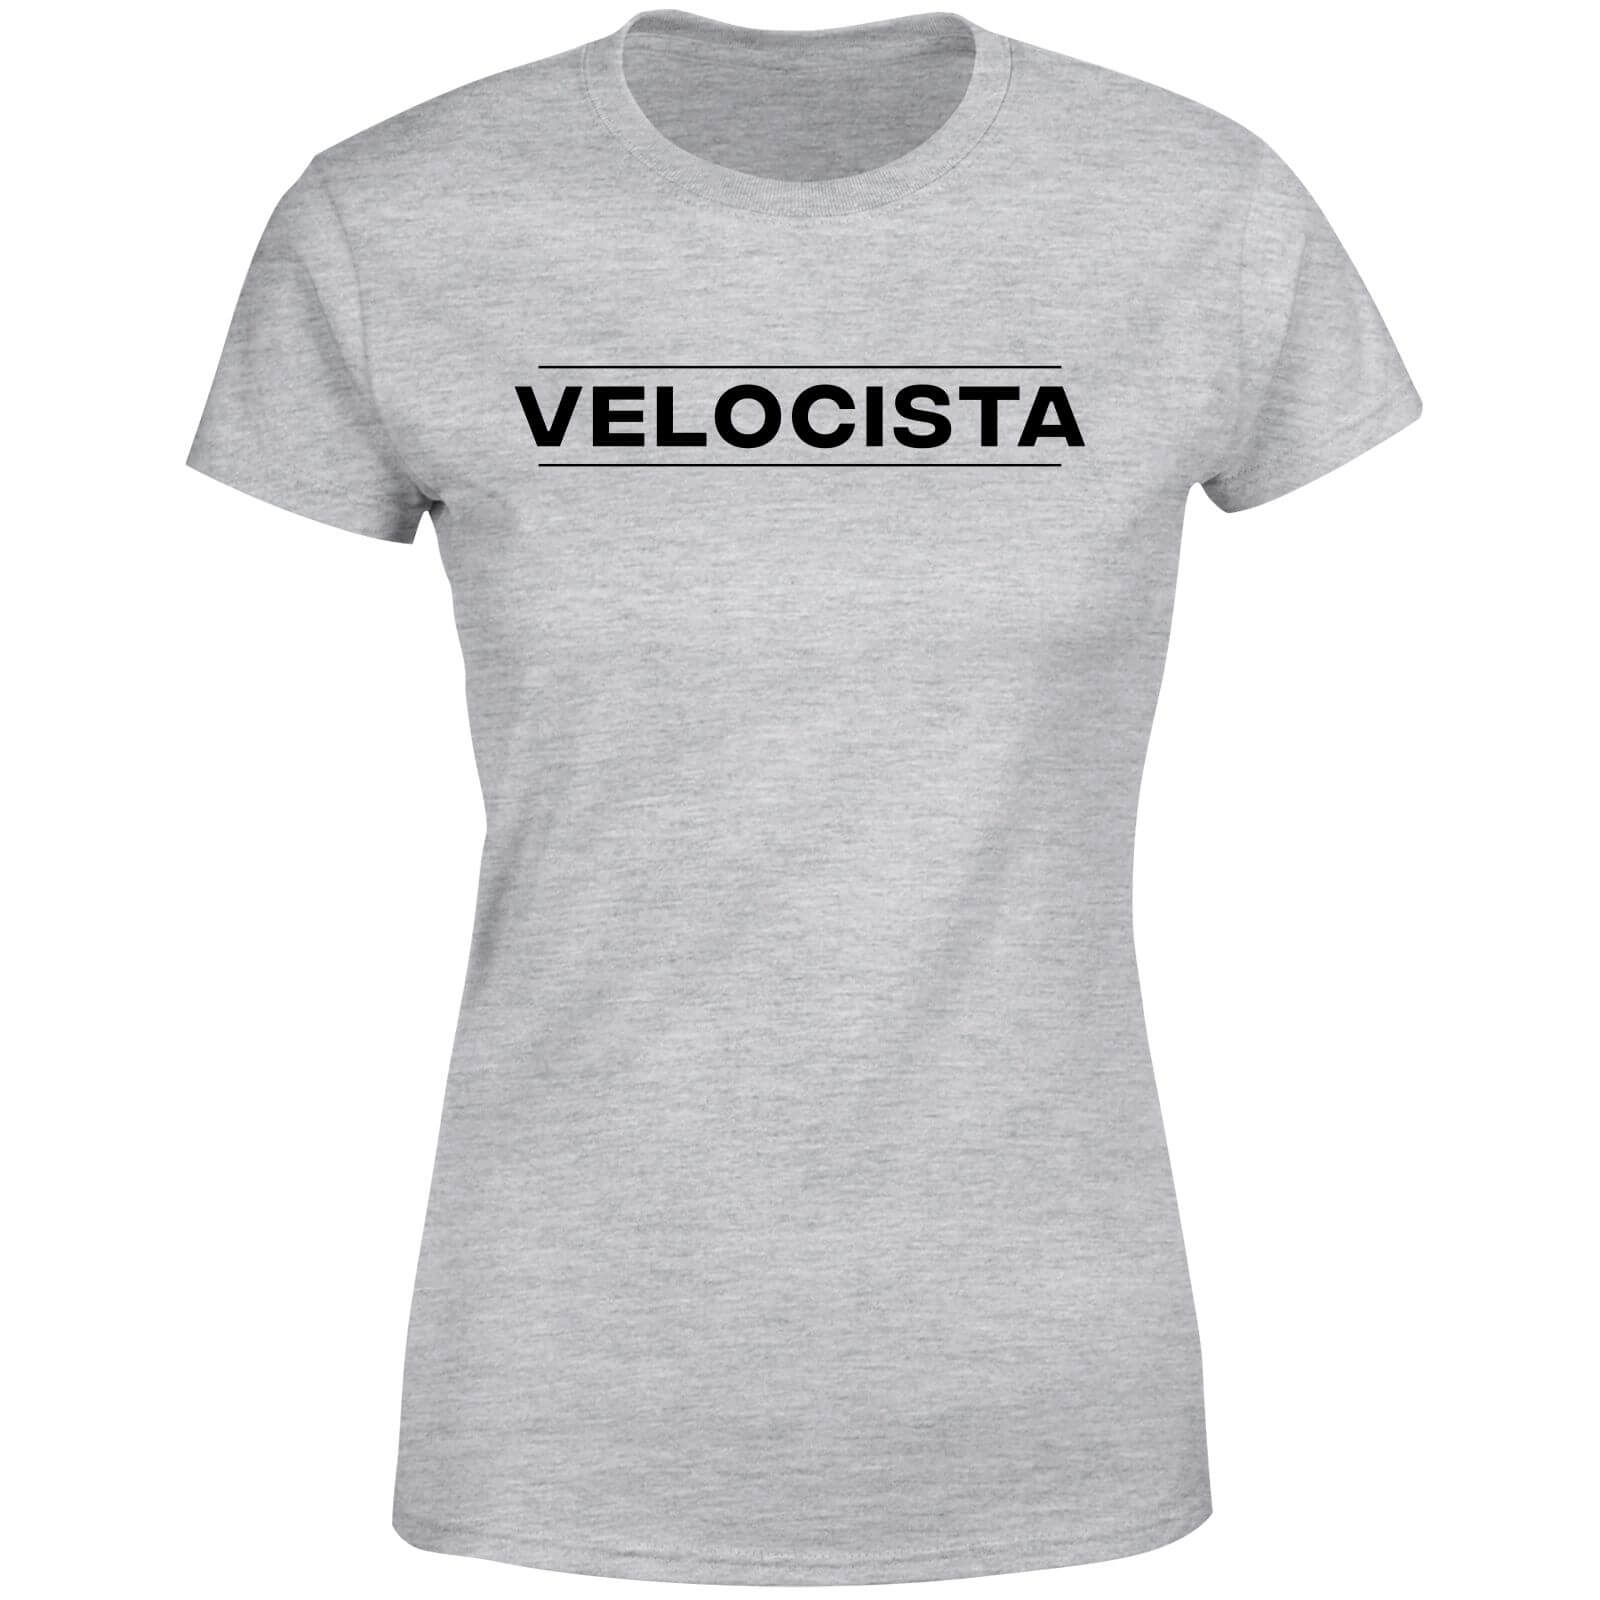 Velocista Women's T-Shirt - Grey - 5XL - Grey